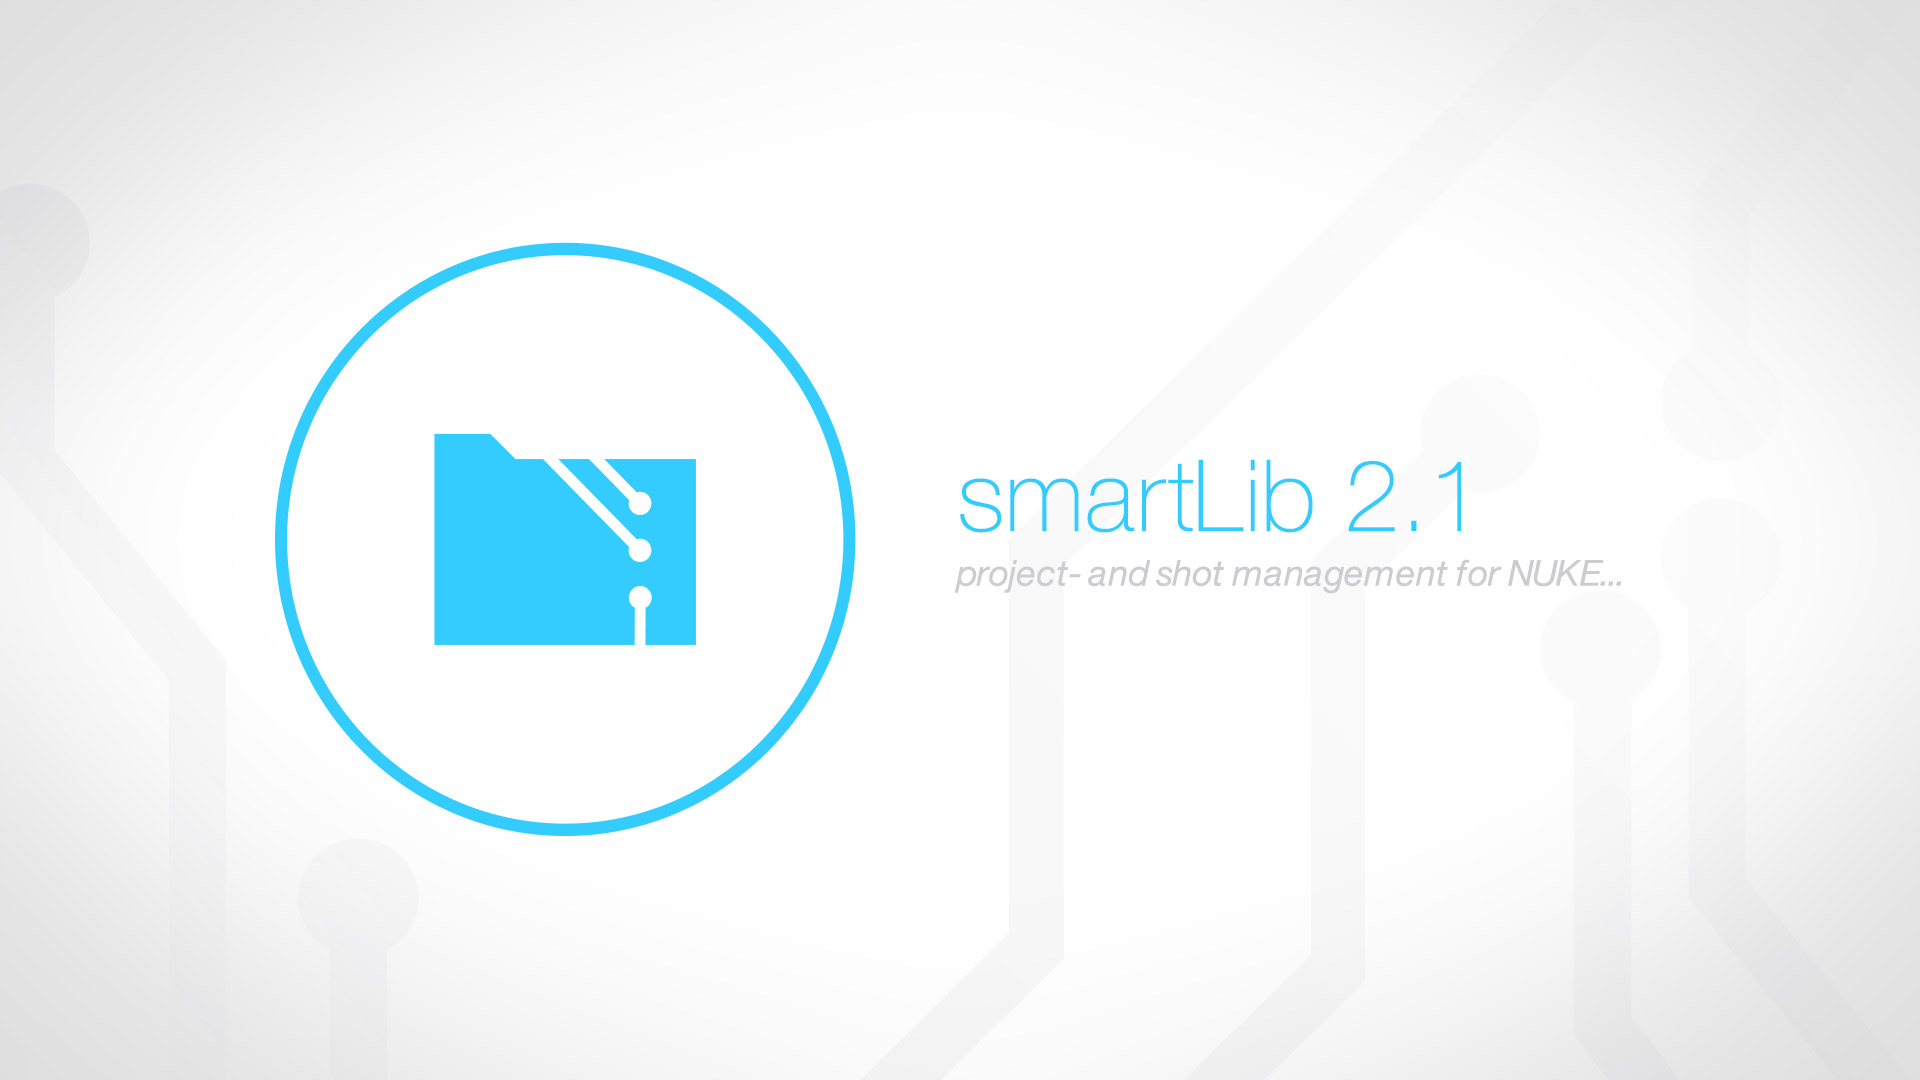 smartLib 2.1